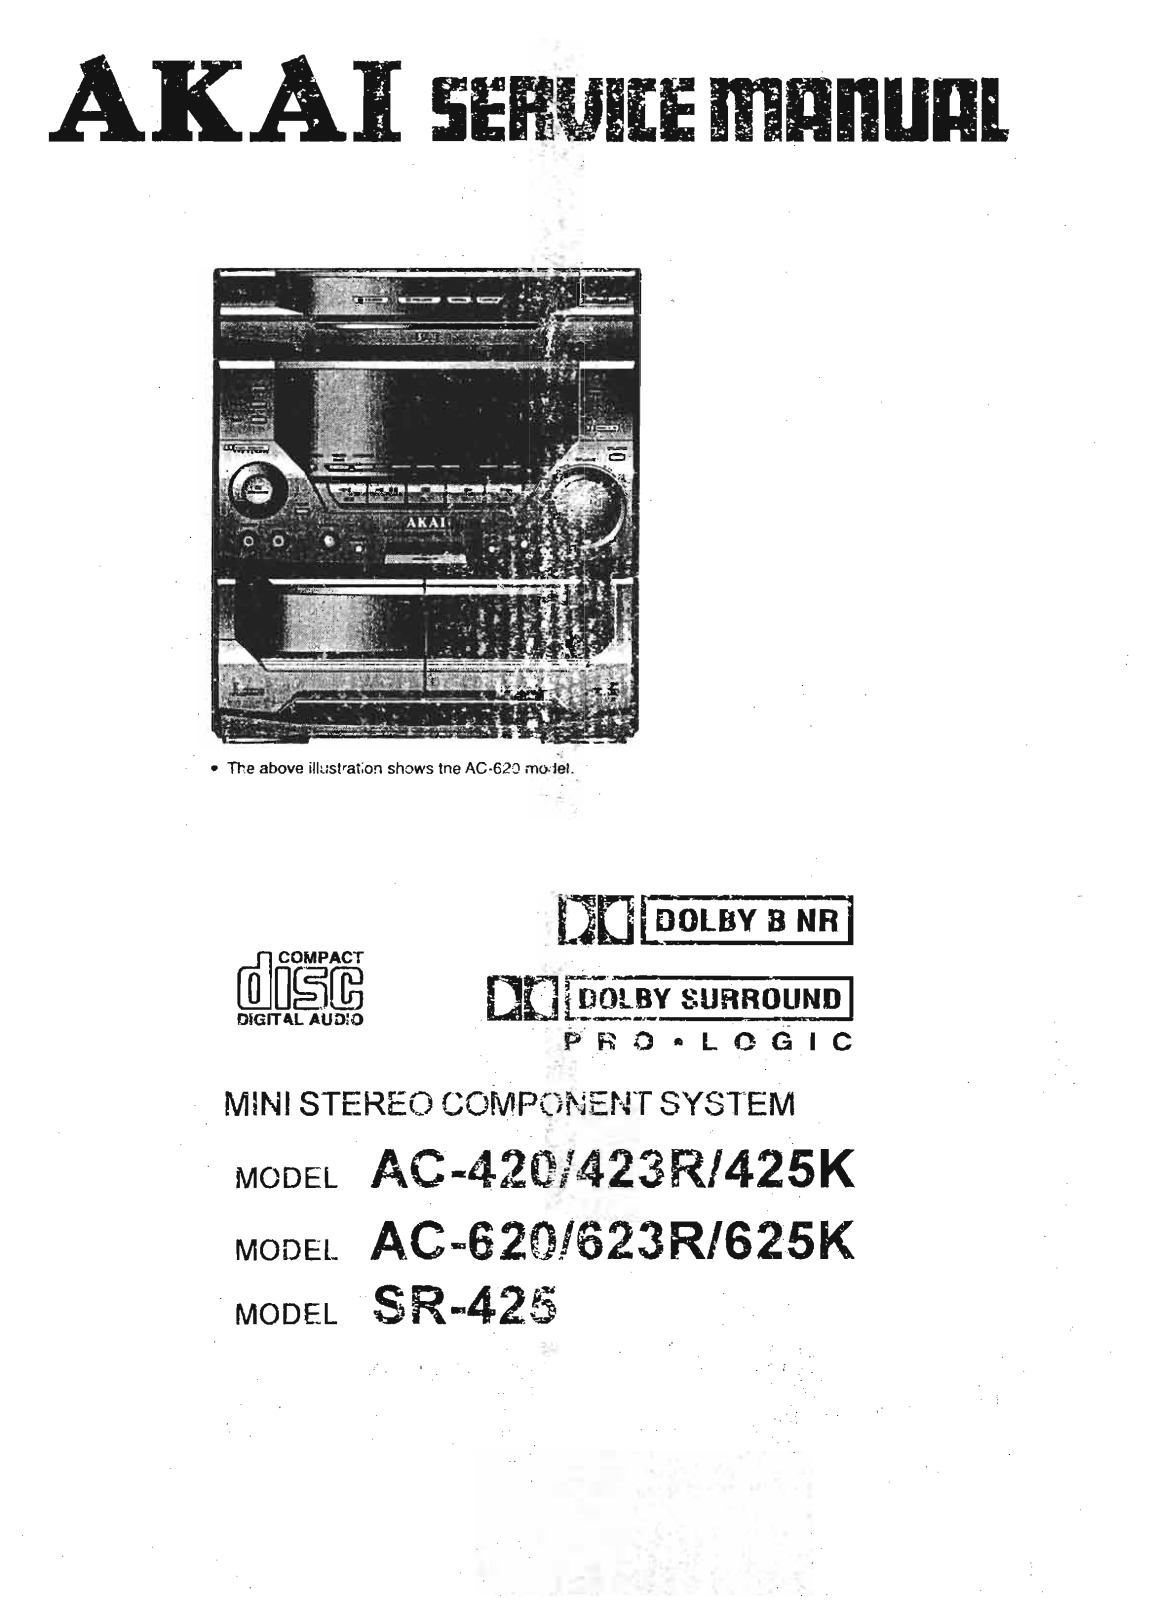 Akai AC-625-K, AC-623-R, AC-620, AC-425-K, AC-423-R Service Manual